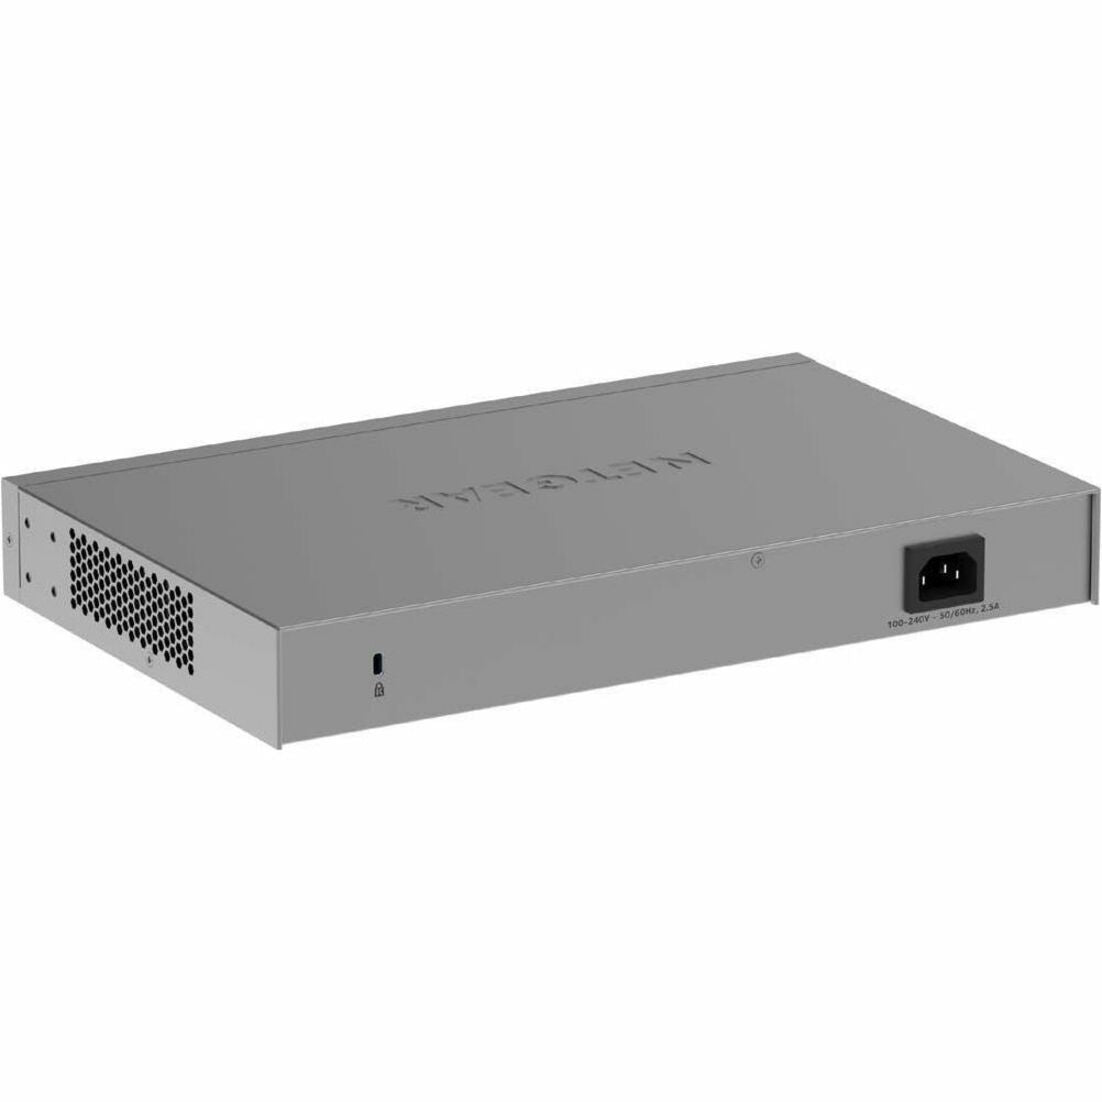 Marca: Netgear Switch Ethernet Netgear XS516TM-100NAS Smart S3600 XS516TM 16 Puertos de Ethernet Gigabit 2 Ranuras de Expansión de Ethernet de 10 Gigabit